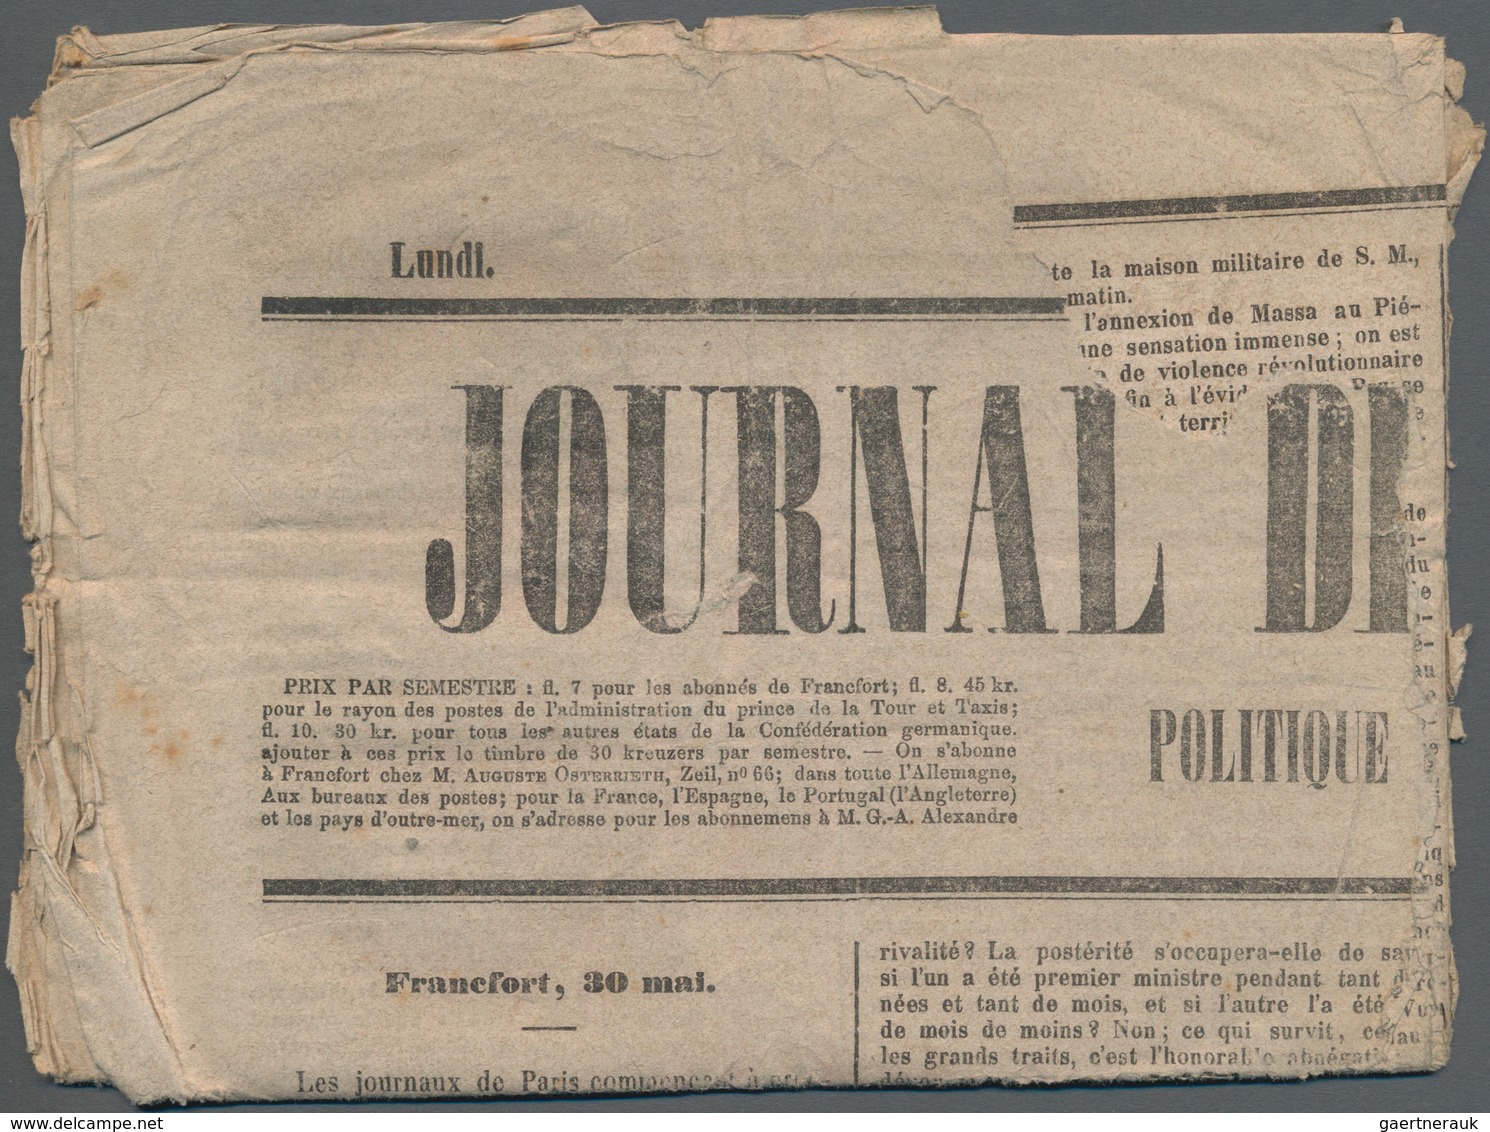 Italien - Altitalienische Staaten: Modena - Zeitungsstempelmarken: 1859, Complete Newspaper 'JOURNAL - Modena